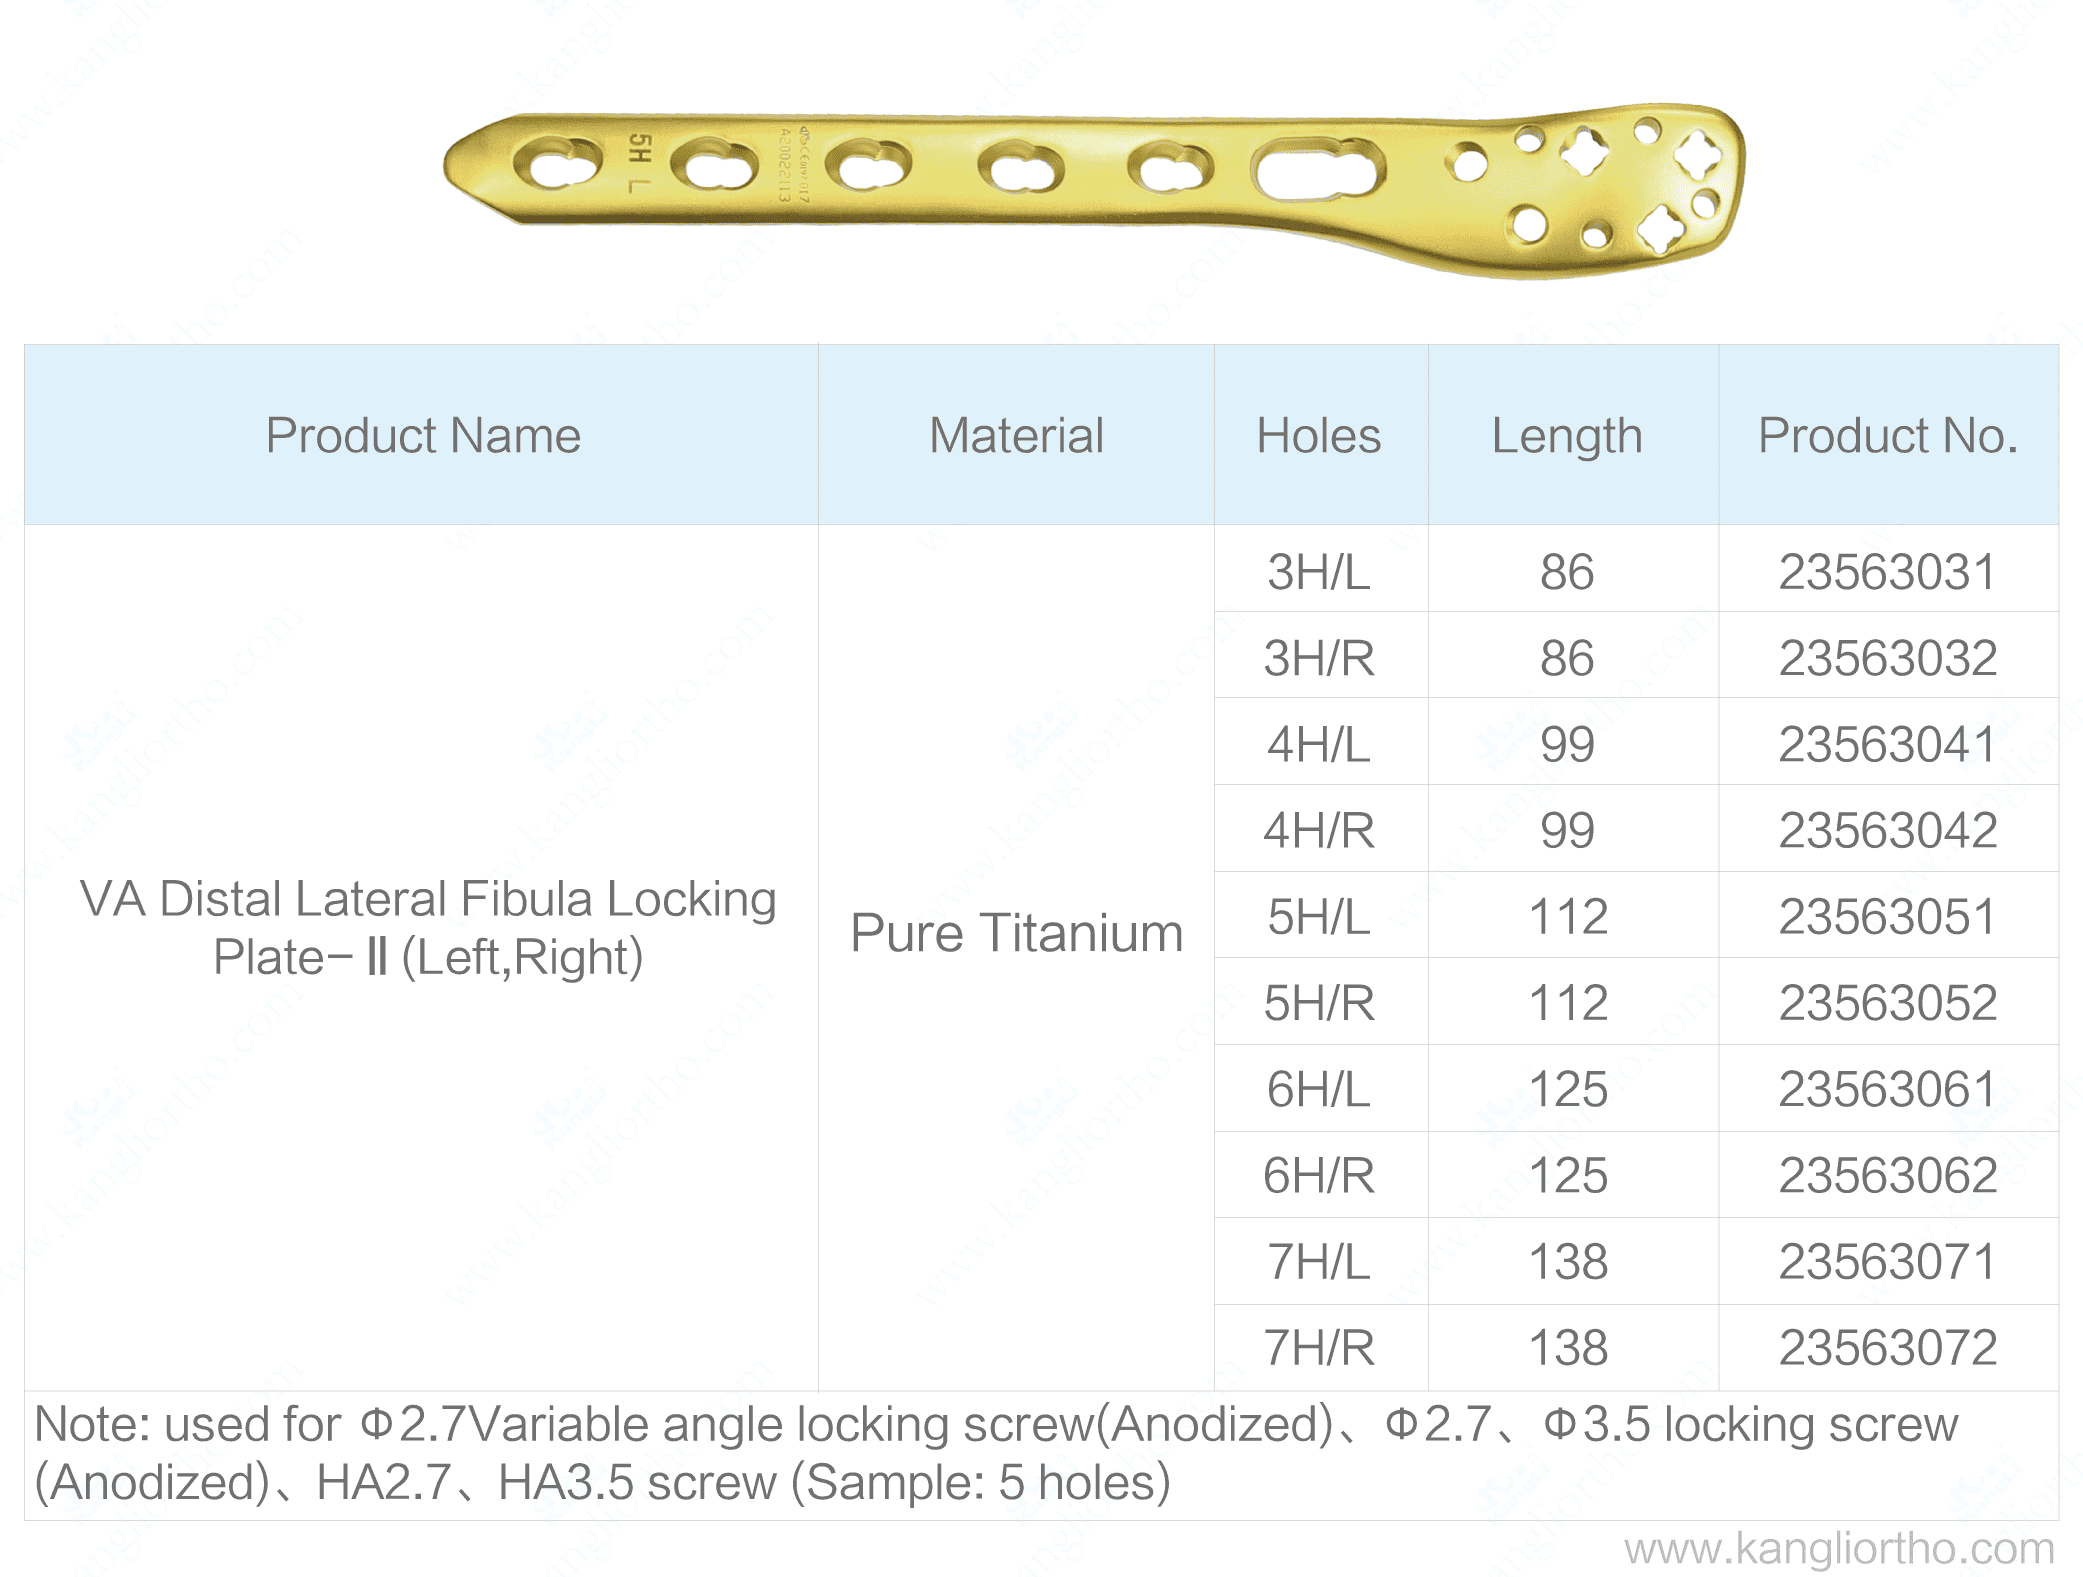 va-distal-lateral-fibula-locking-plate-ii-specifications